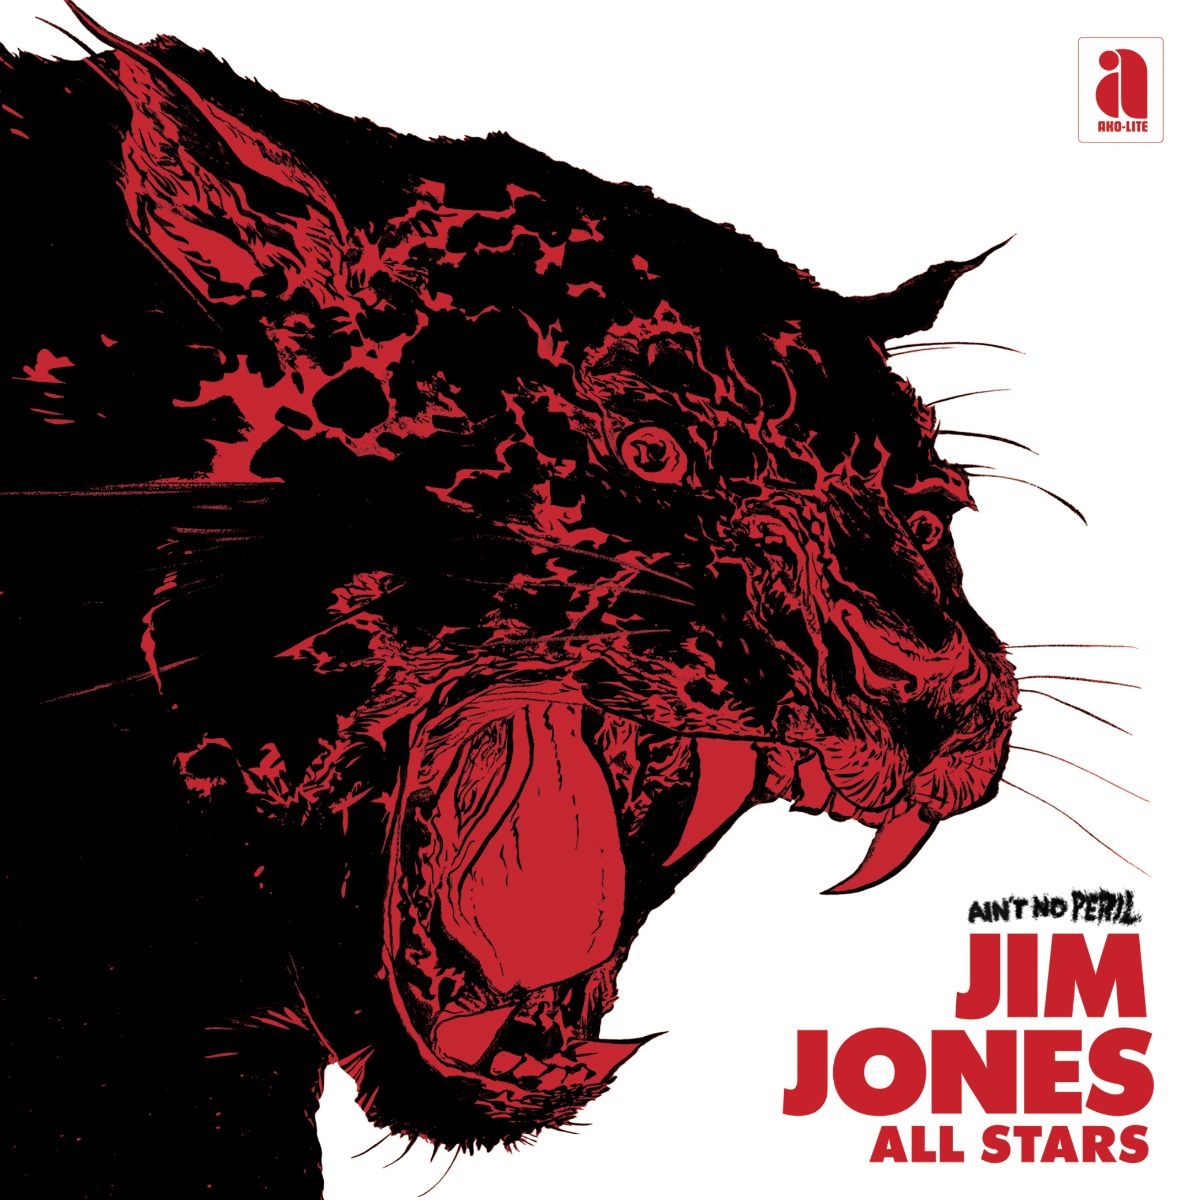 Jim Jones All Stars - Ain't No Peril: Vinyl LP